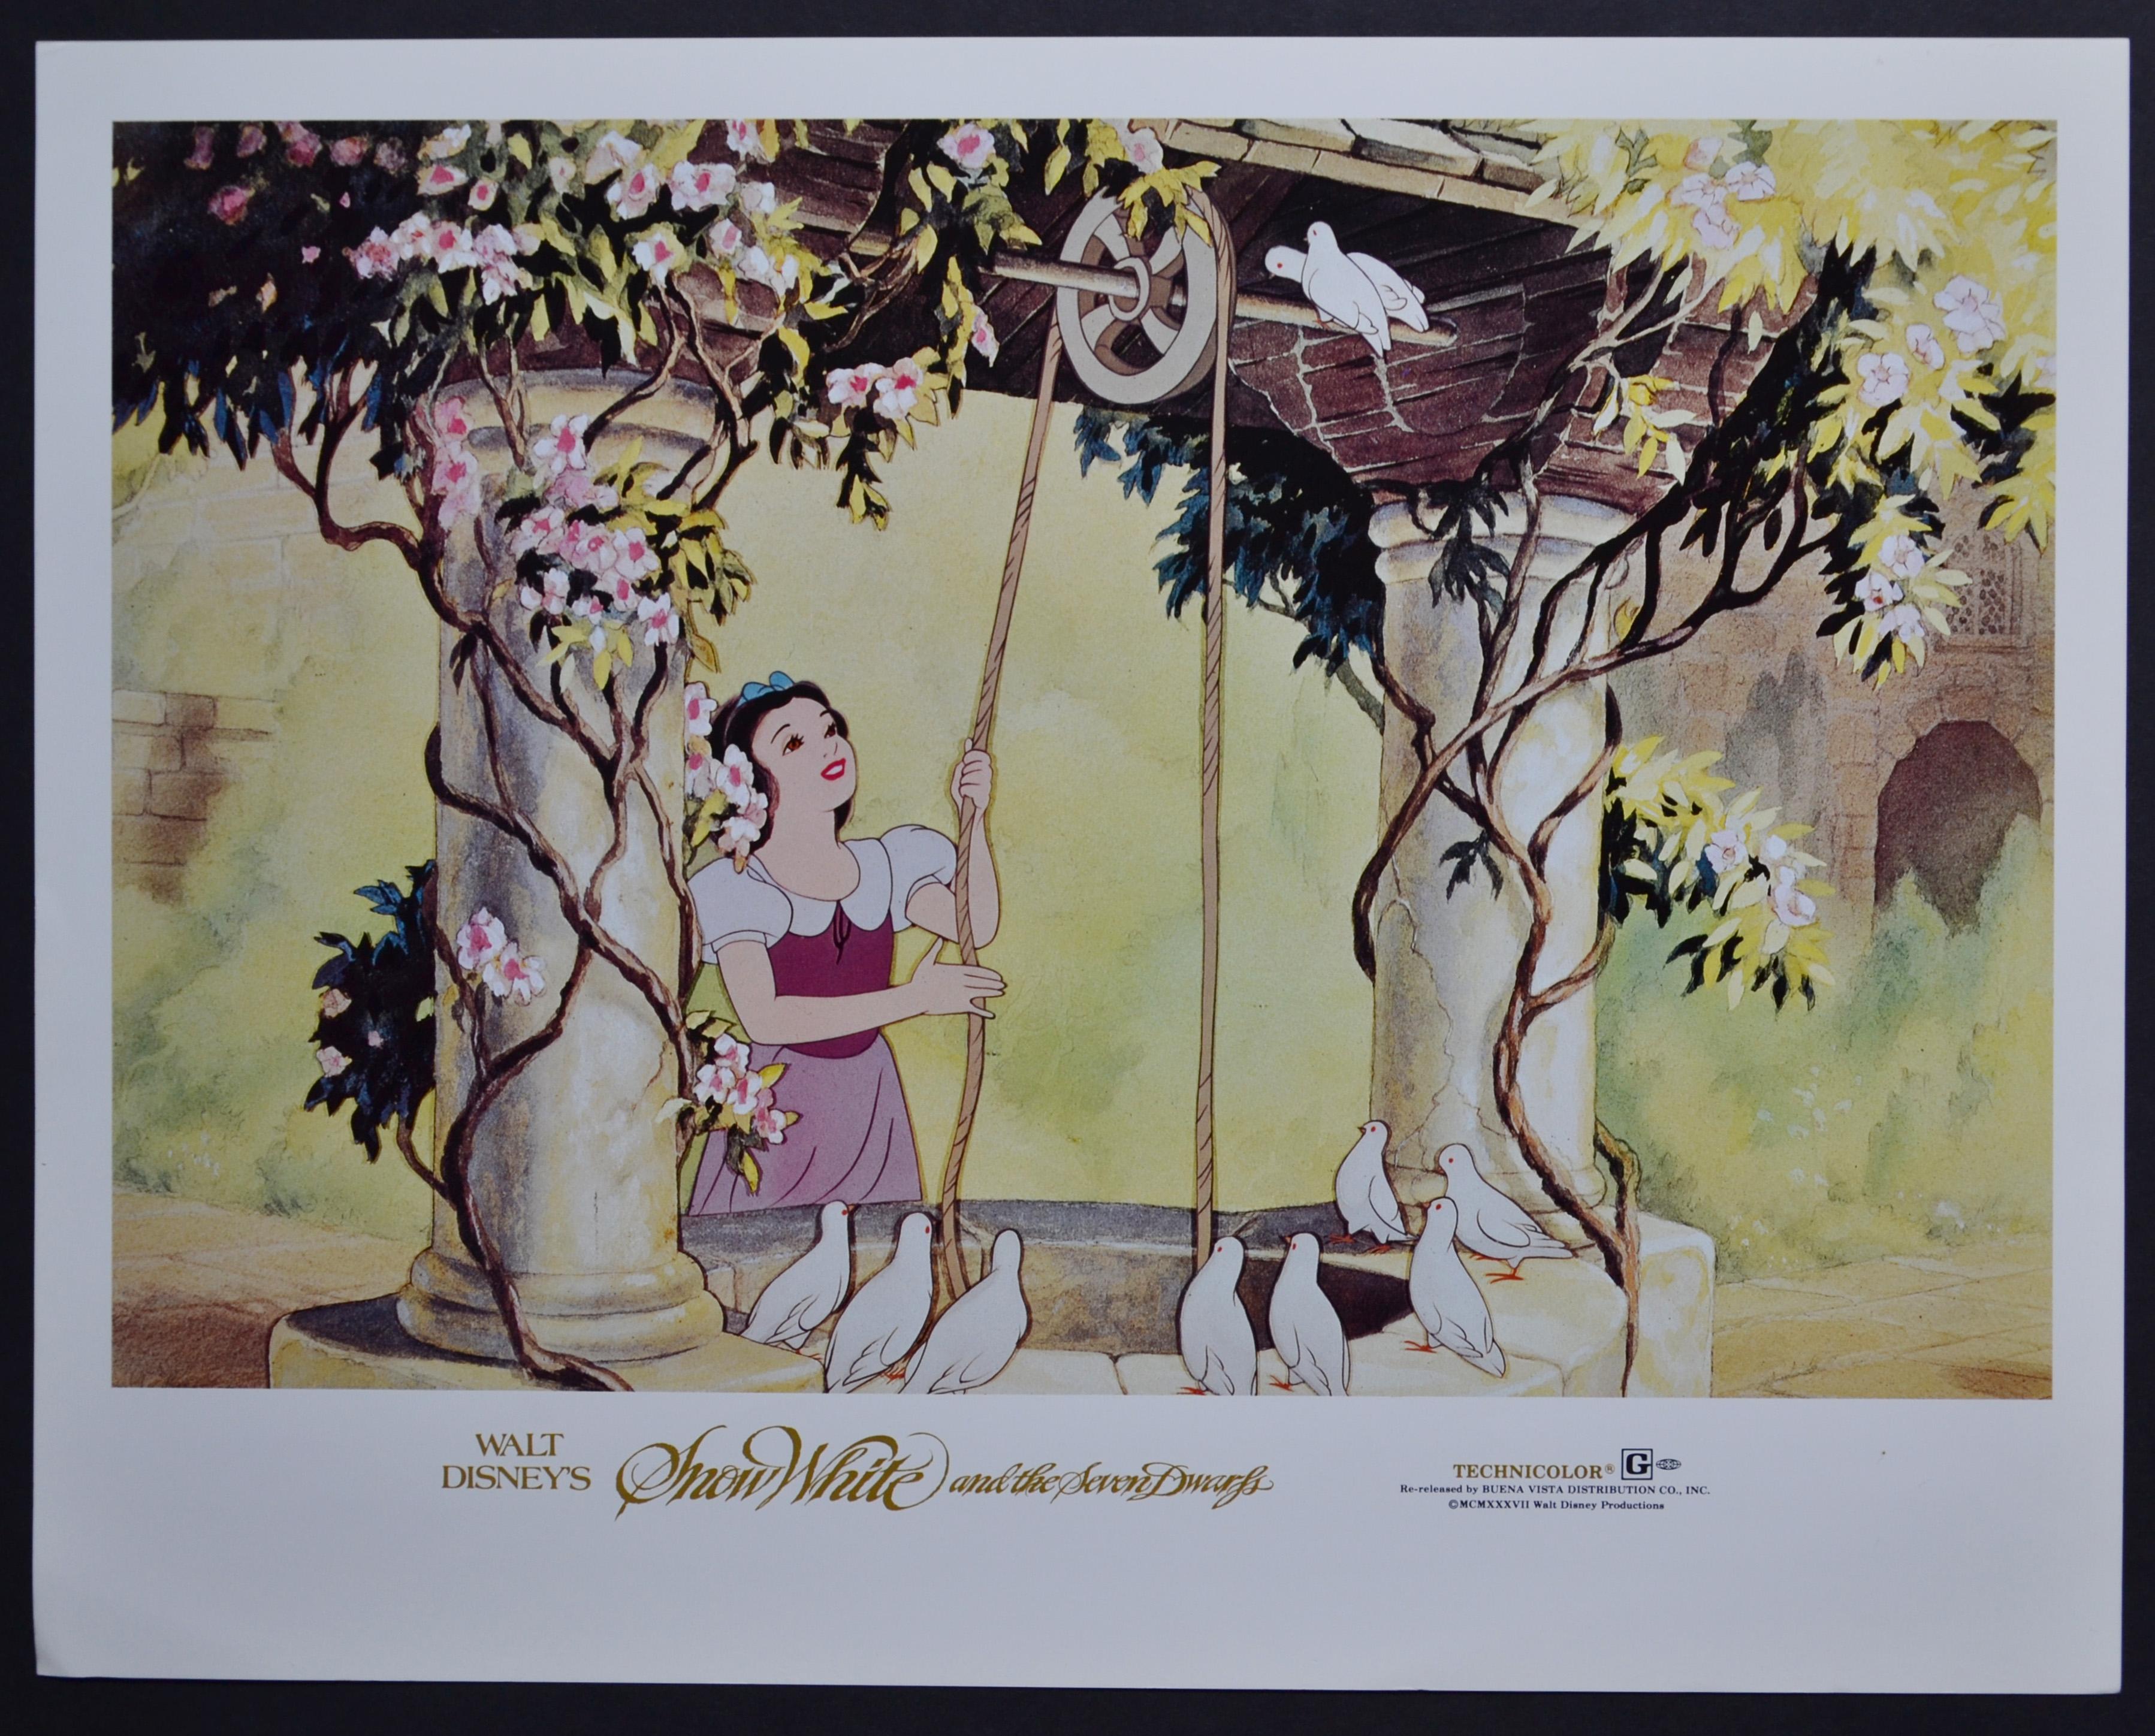 Unknown Interior Print – Snow White and the Seven Dwarfs, Lobby-Karte von Walt Disneys, USA 1937.